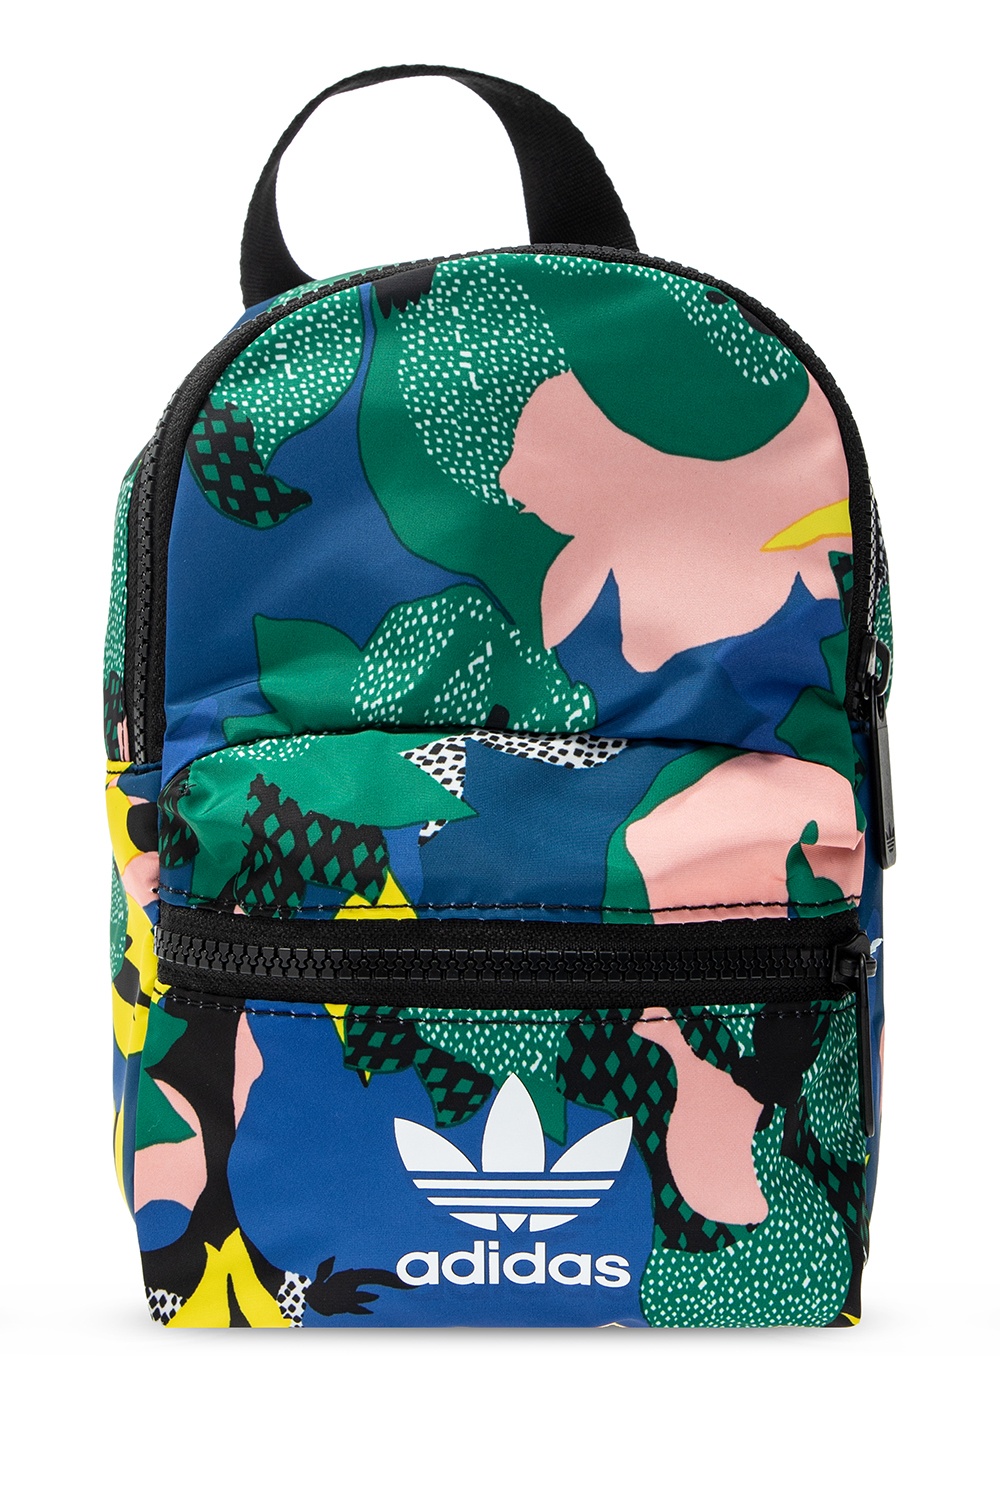 adidas bape backpack